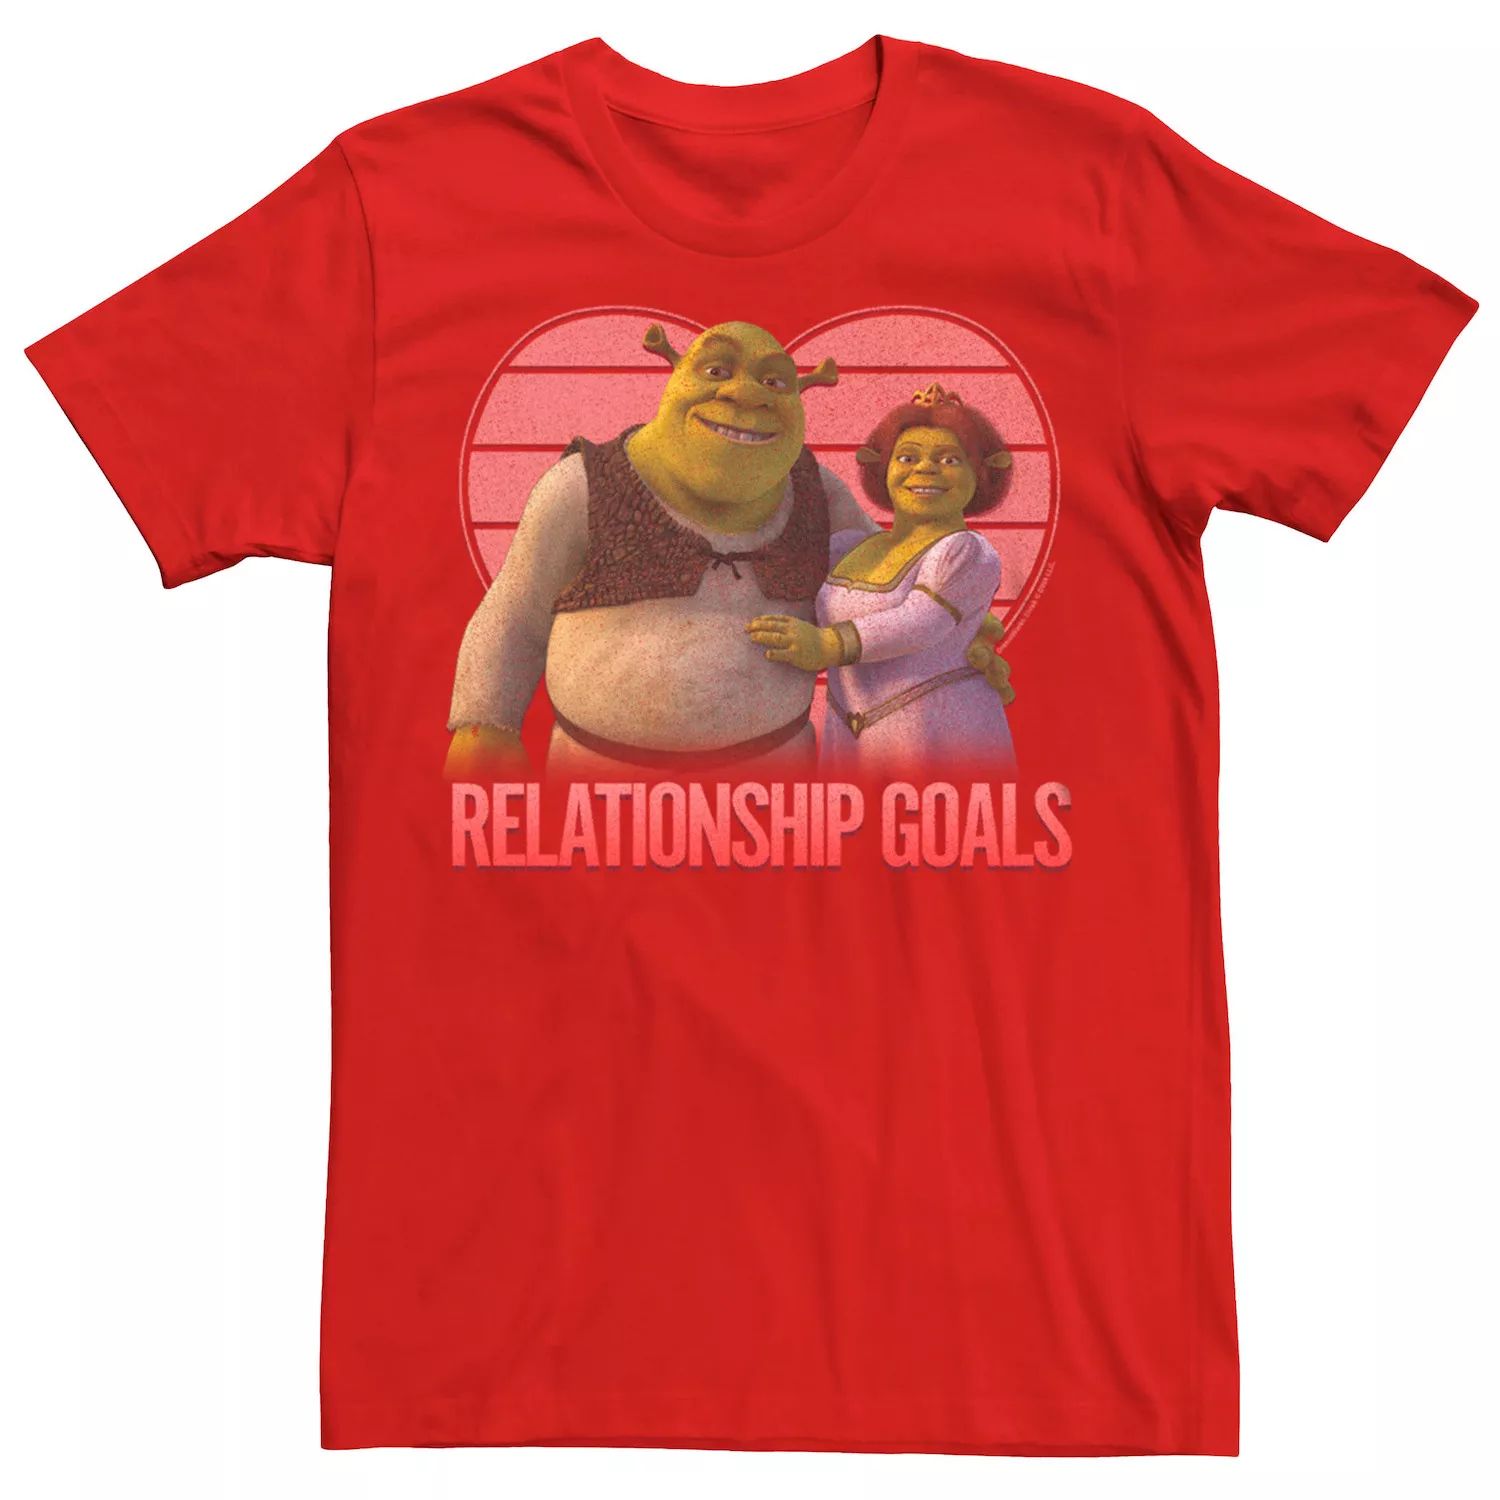 Мужская футболка DreamWorks Shrek Relationship Goals с графическим рисунком Licensed Character